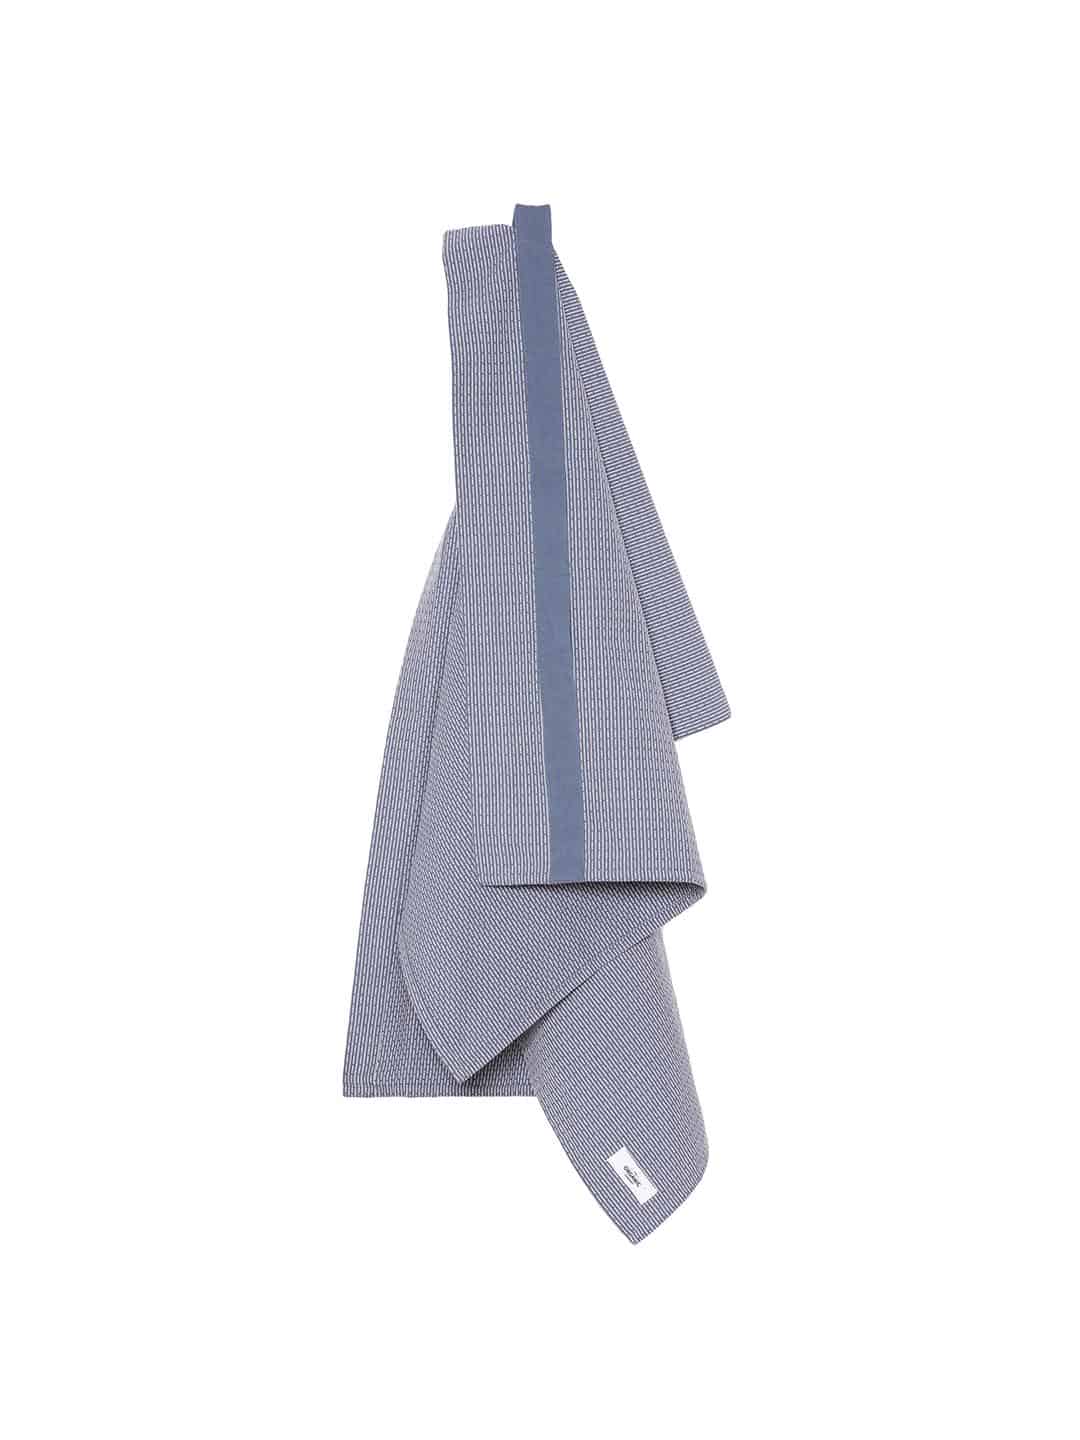 Дорогое полотенце для тела с поясом, 155х60см серо-голубого цвета